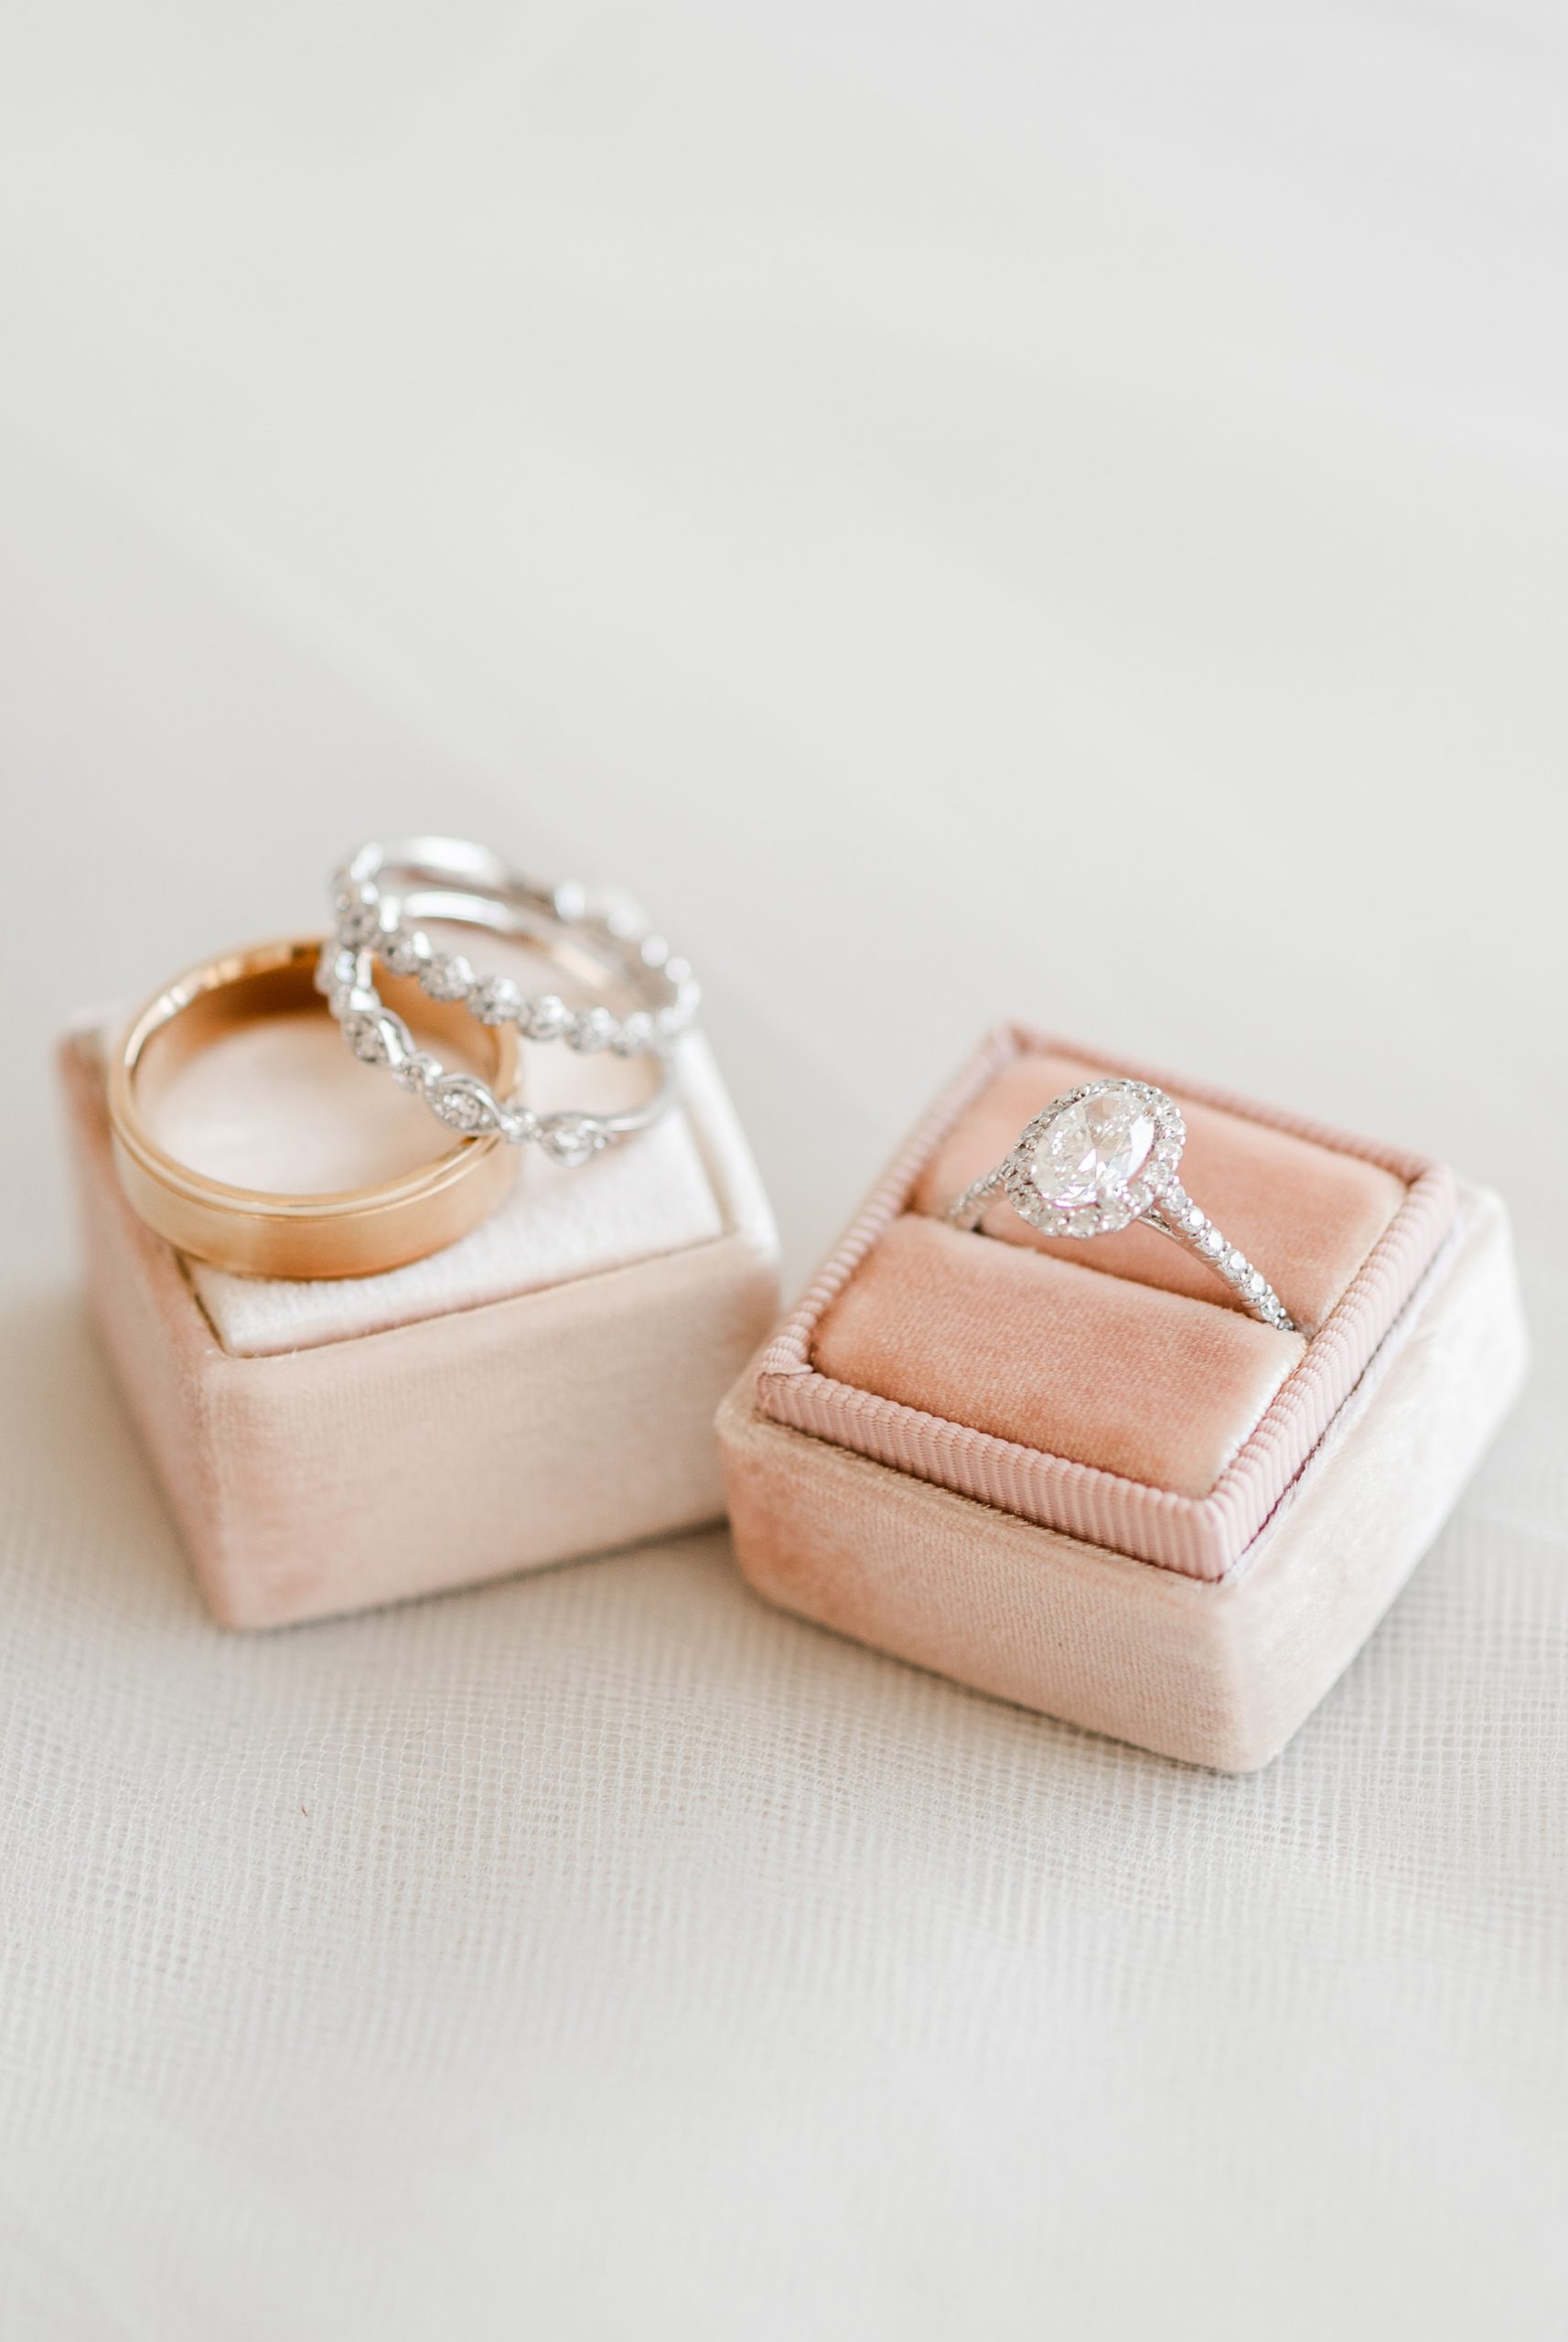 wedding rings in pale pink box